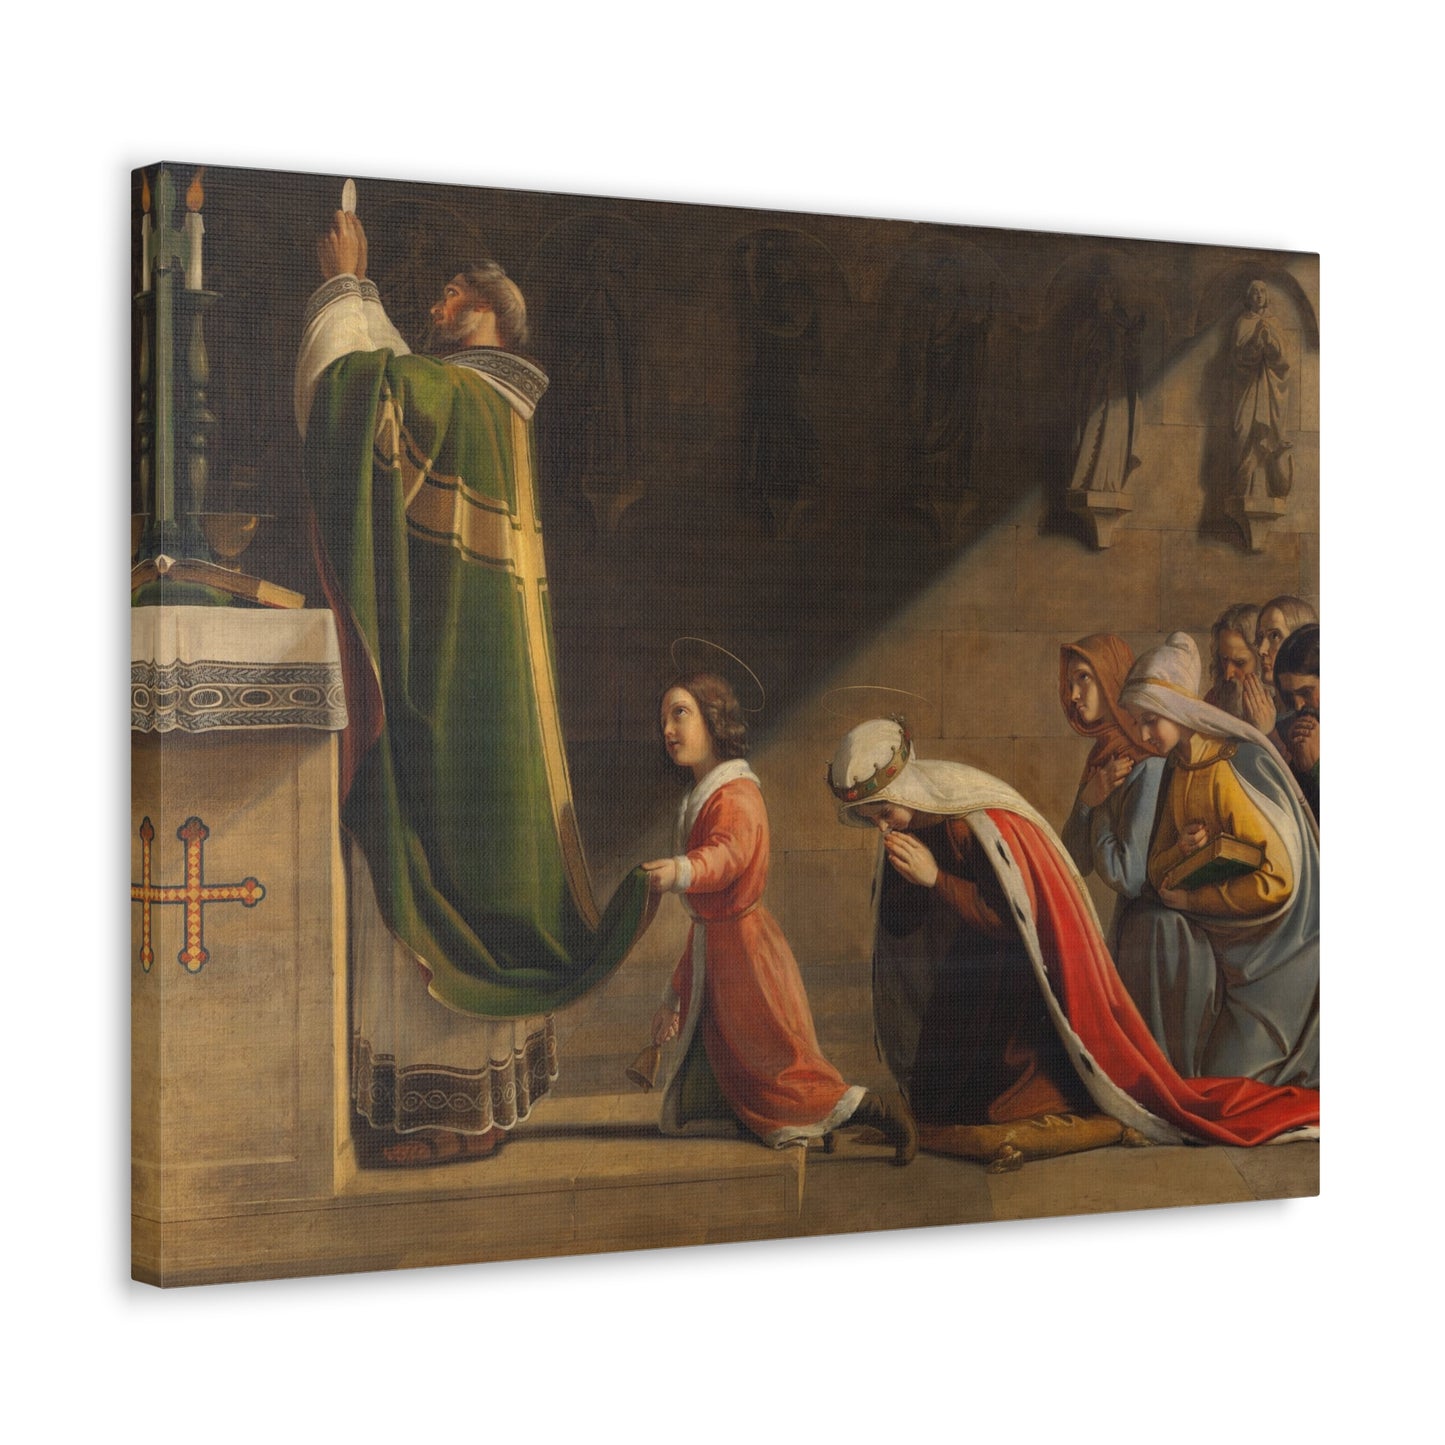 Saint Wenceslas and Saint Ludmila in mass 1837 Frantisek Tkadlik, Catholic Canvas Print, Religious Home Art, All Saints Day, House Warming